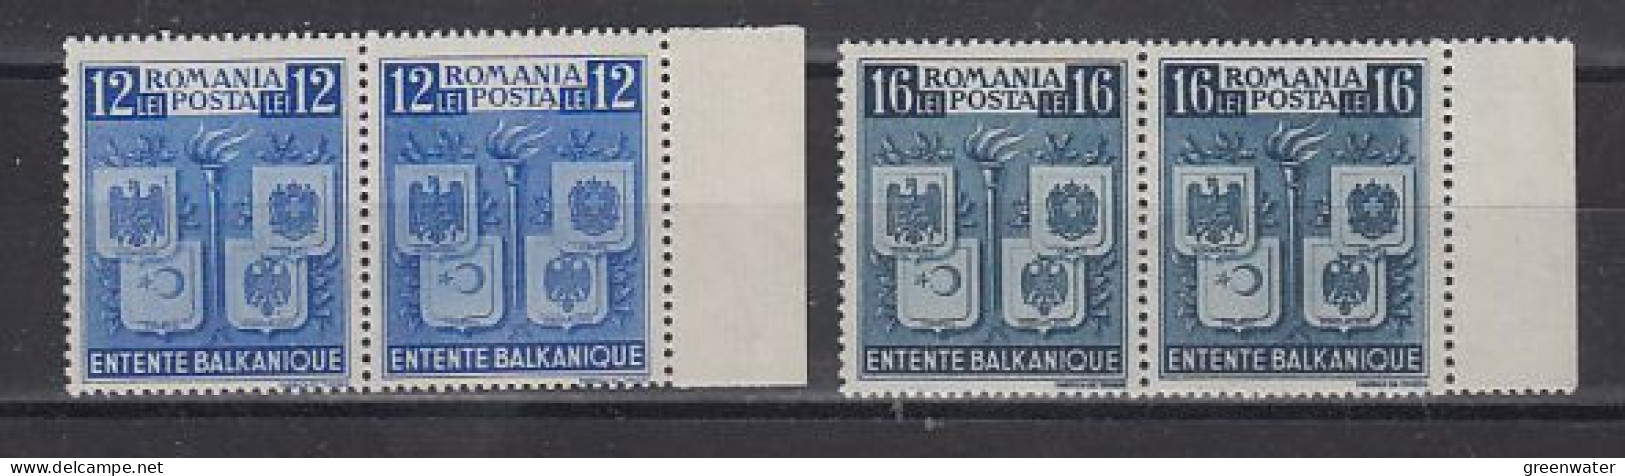 Romania 1940 Petite Entente 2v (pair) ** Mnh (59753) - Idee Europee